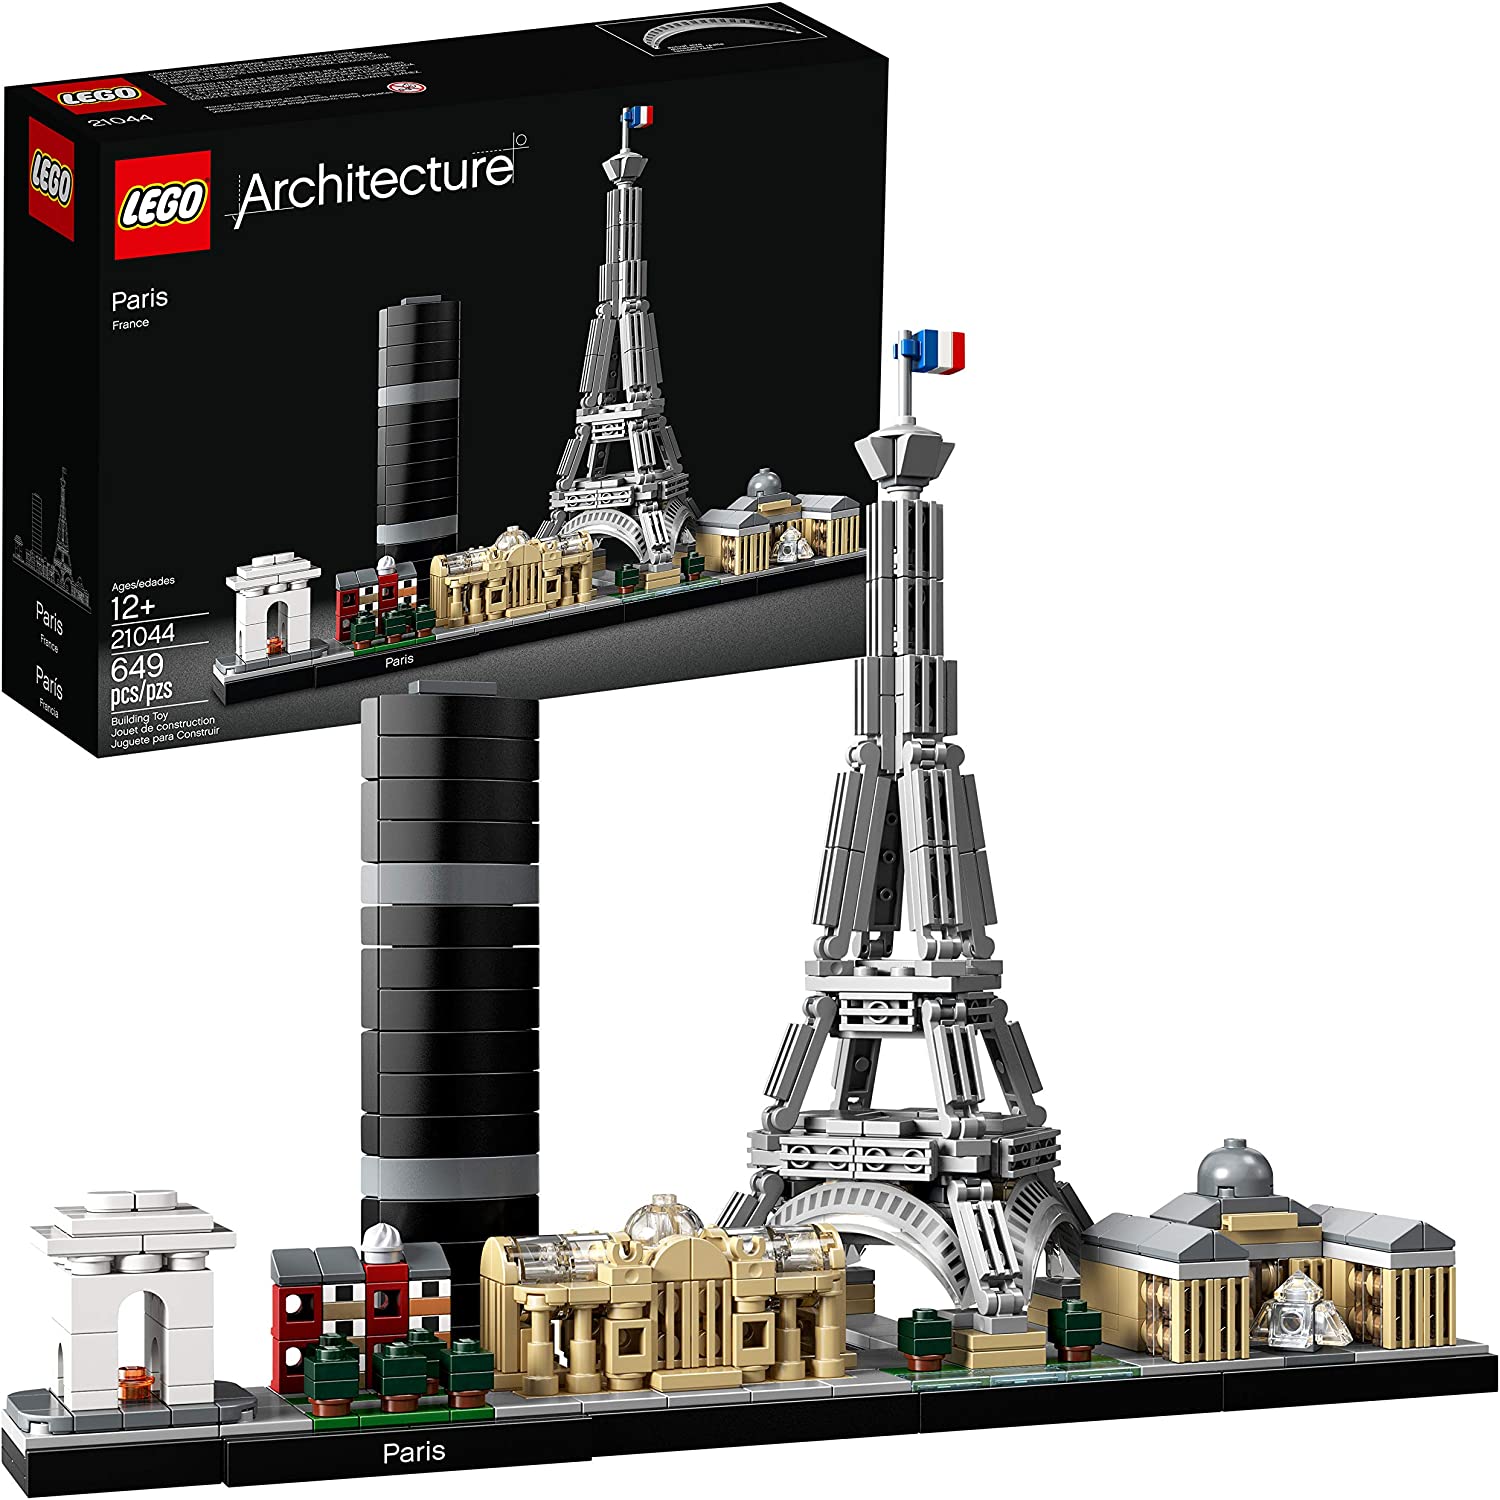 LEGO Architecture Paris Set 21044